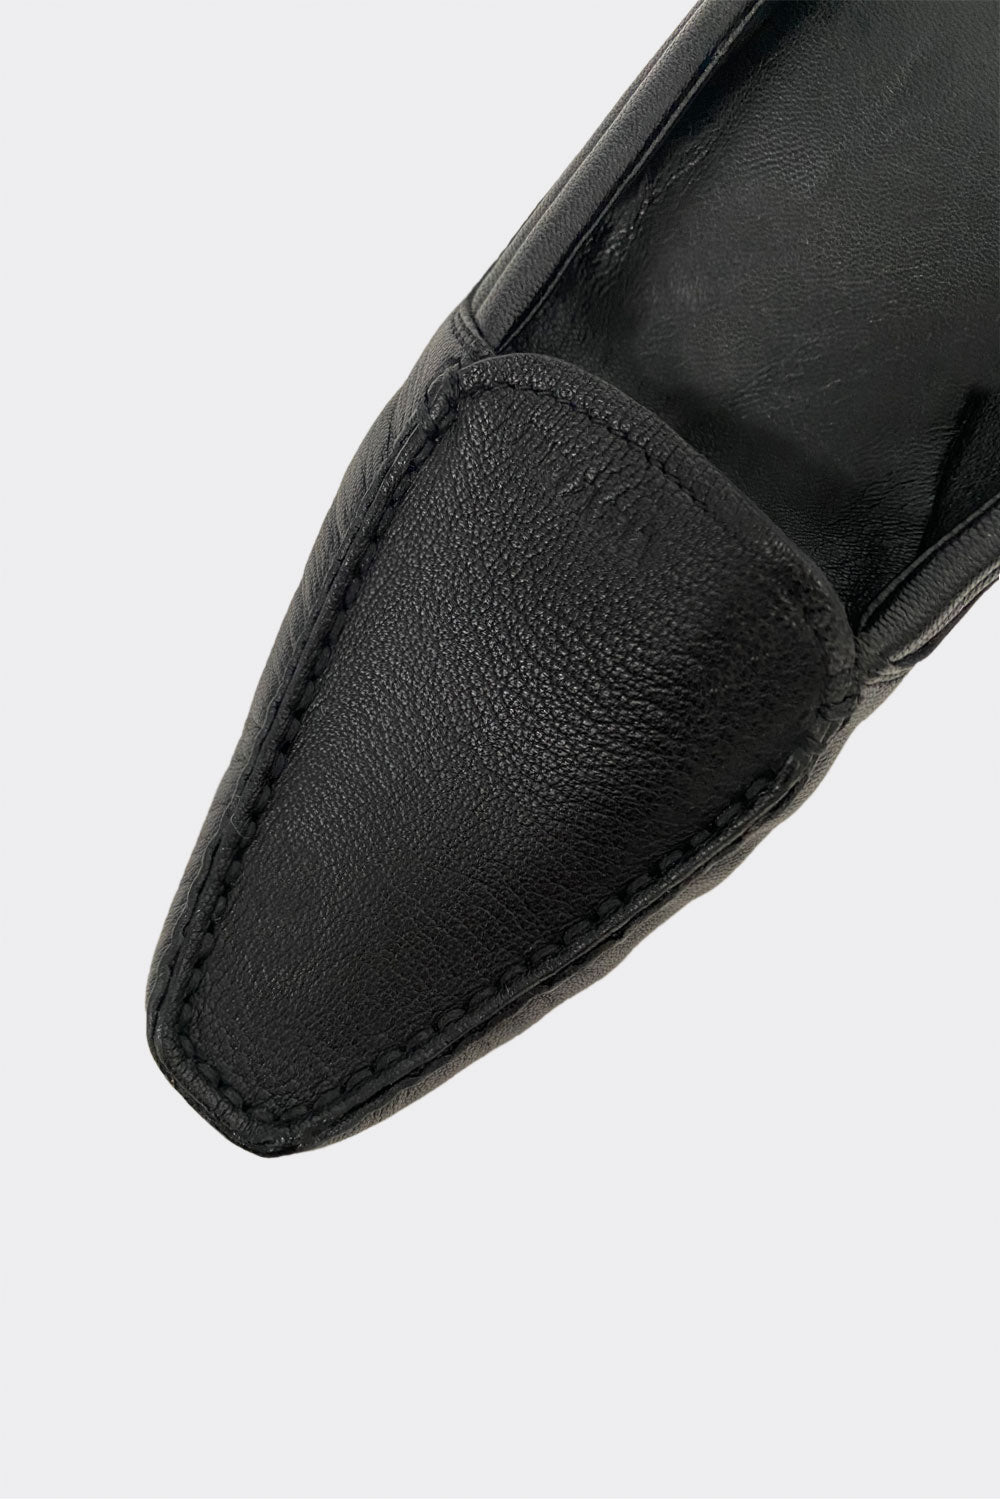 Prada Heeled Loafers Size 36 (UK 3)